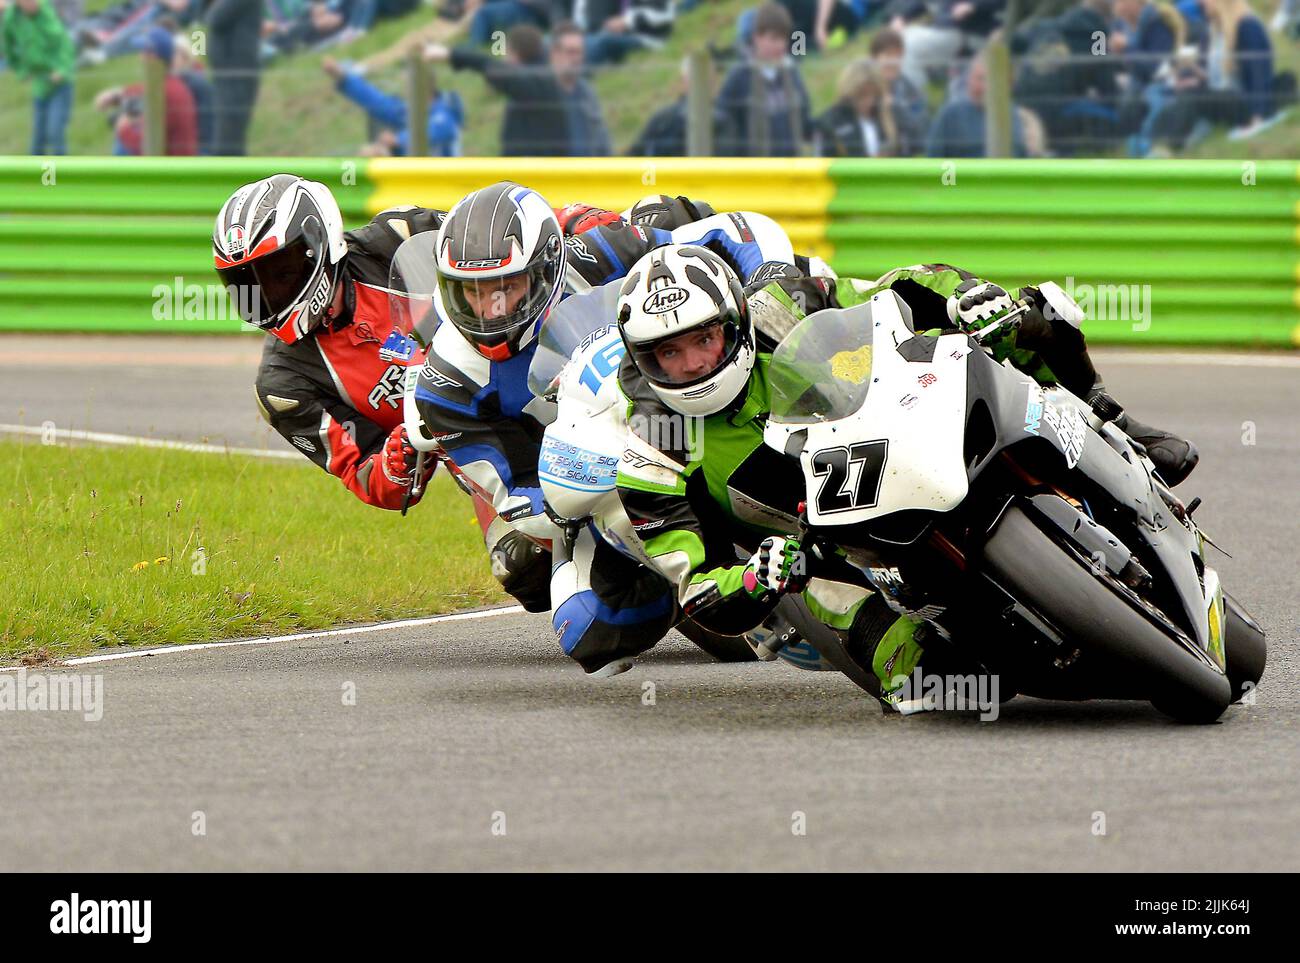 Trackside at the British Superbike Championship, UK Stock Photo